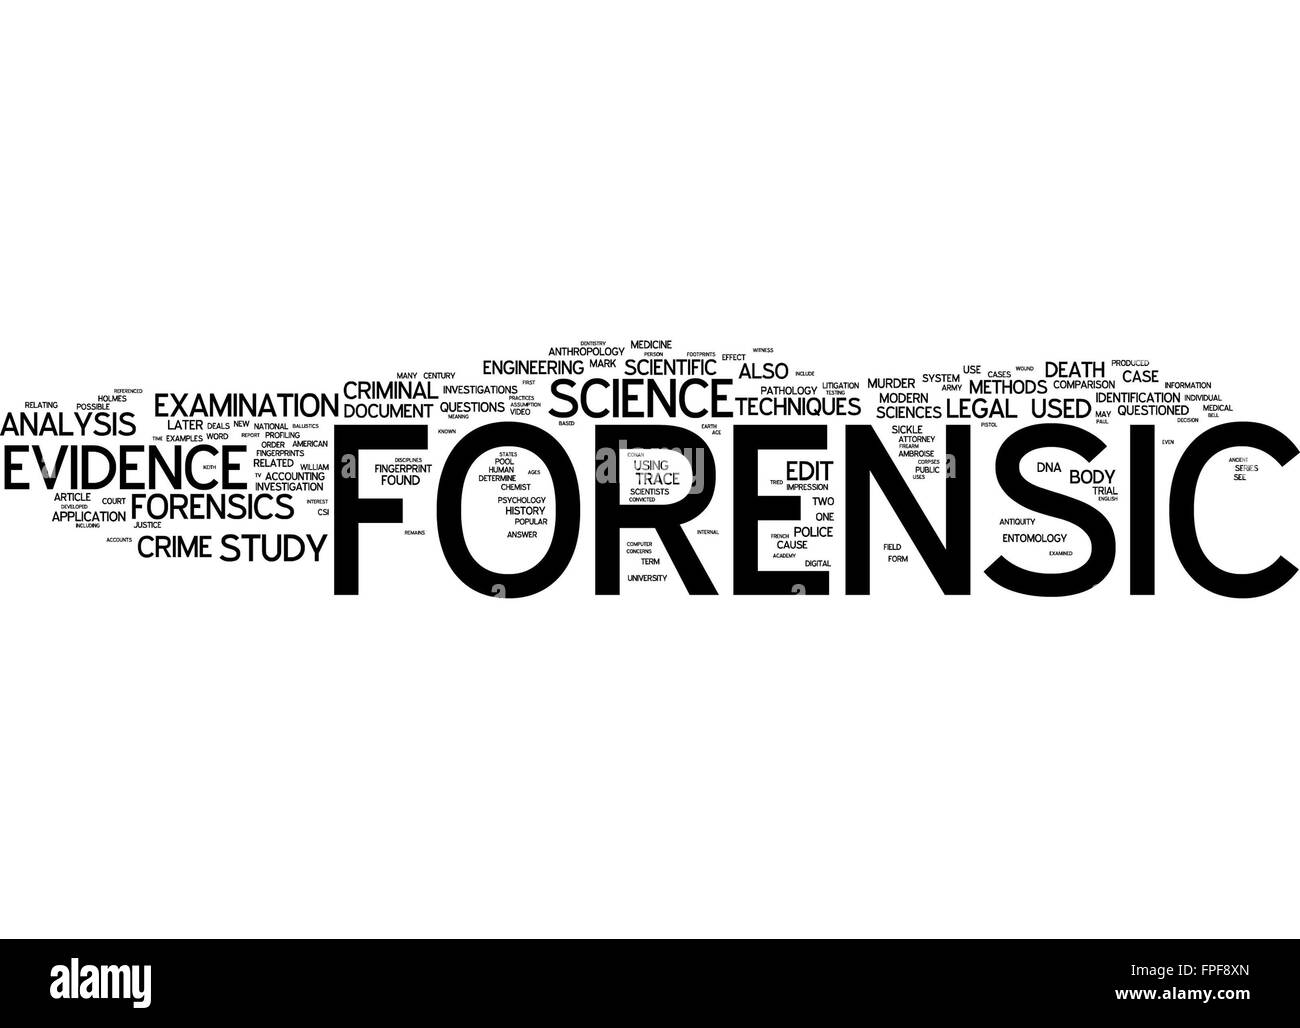 Forensic Science Evidence Analysis Examination Stock Photo Royalty Free Image 99910573 Alamy